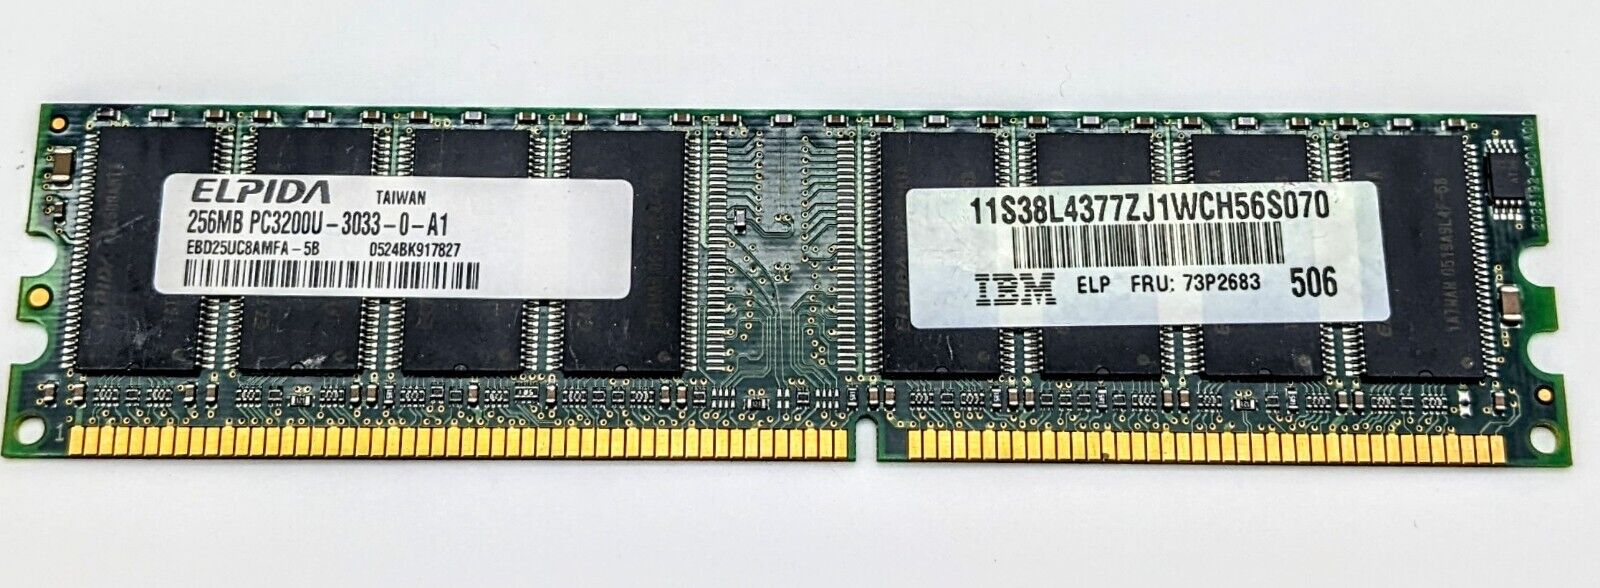 ELPIDA 256MB PC3200 DDR DIMM Memory Module IBM FRU 73P2683 P3200U-3033-0-A1